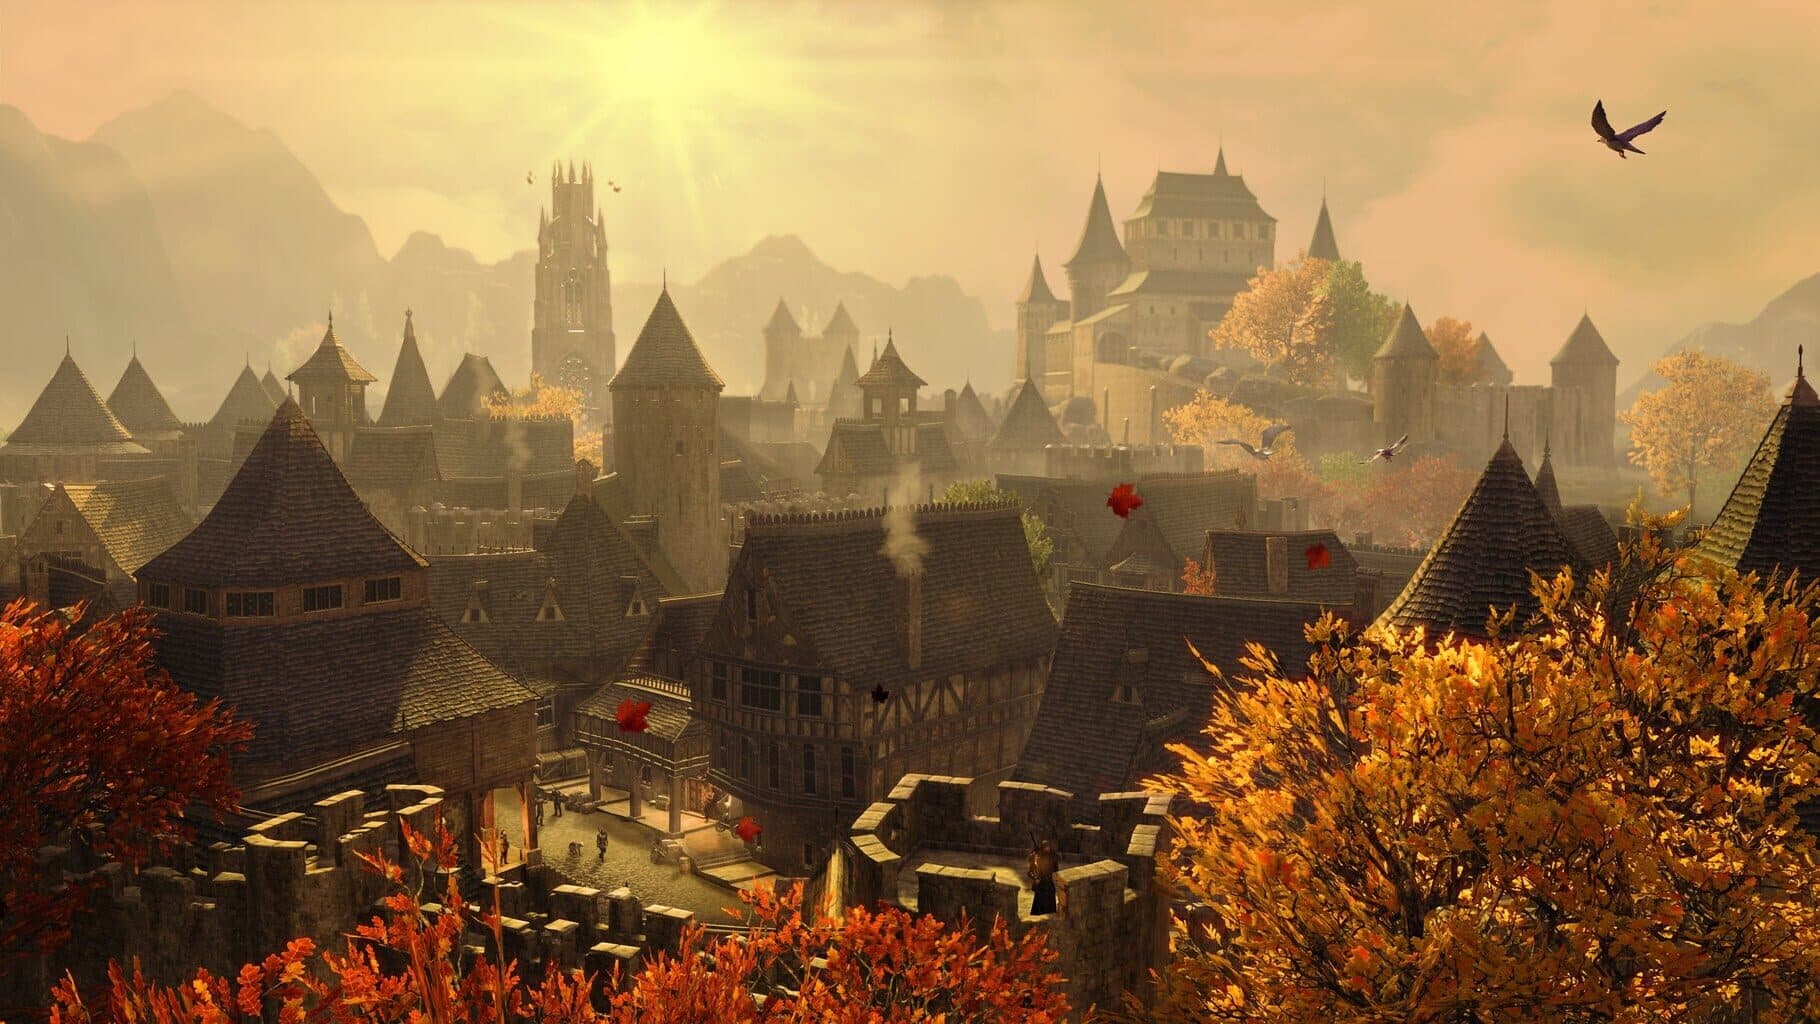 The Elder Scrolls Online Collection: Gold Road Image